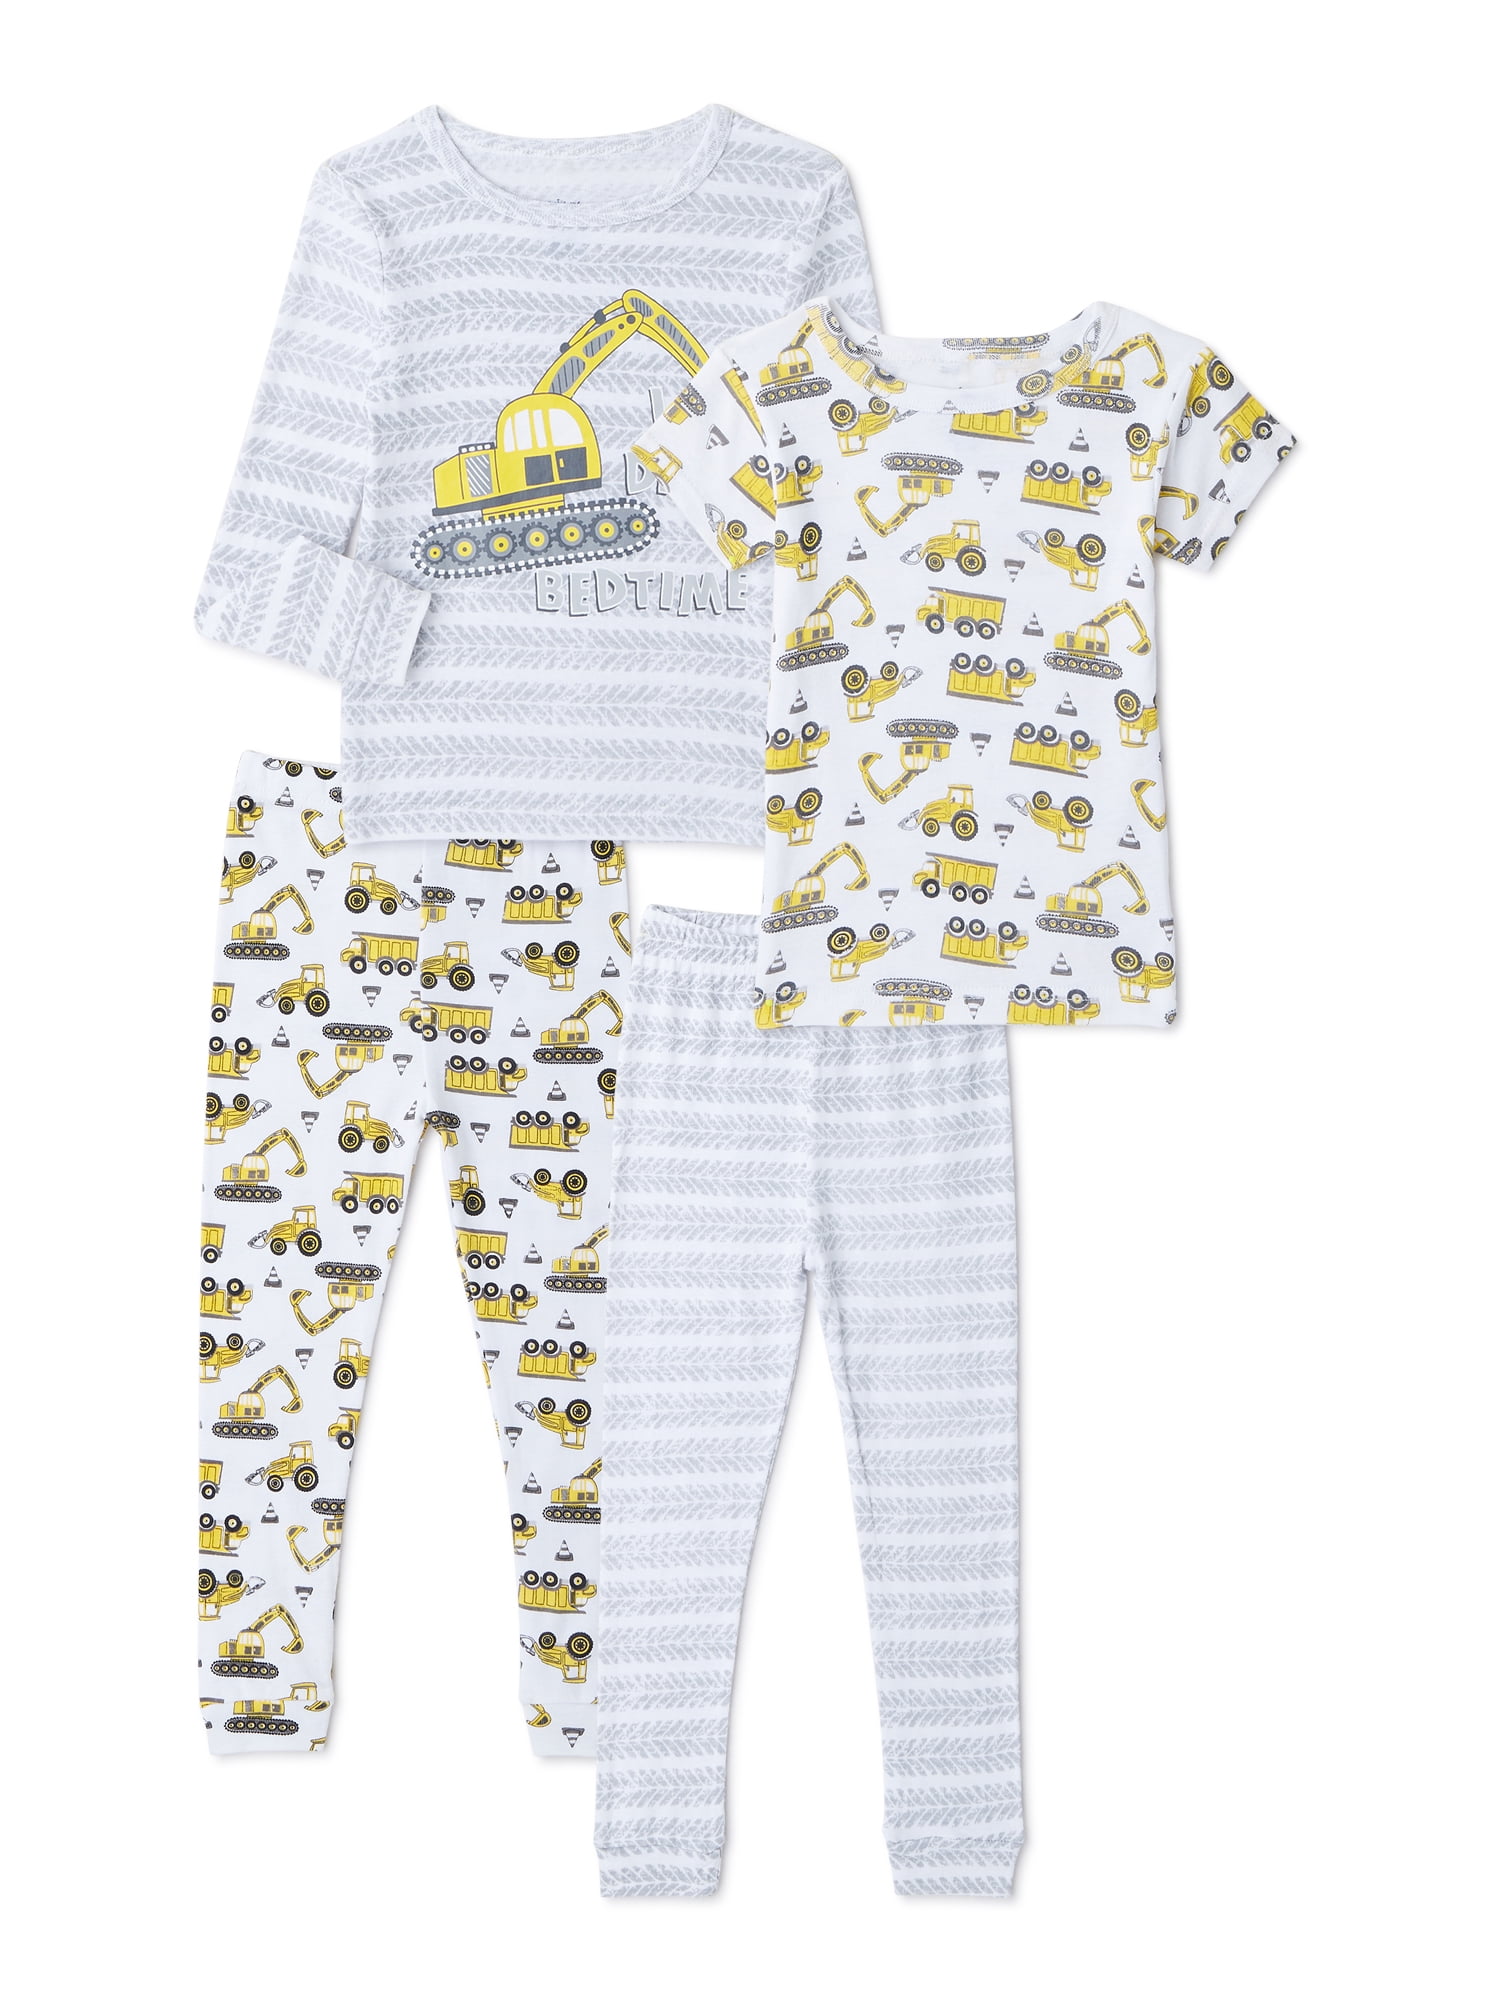 TIFENNY Baby Kids Long Sleeve Floral Print Tracksuit Top+Pants Sets